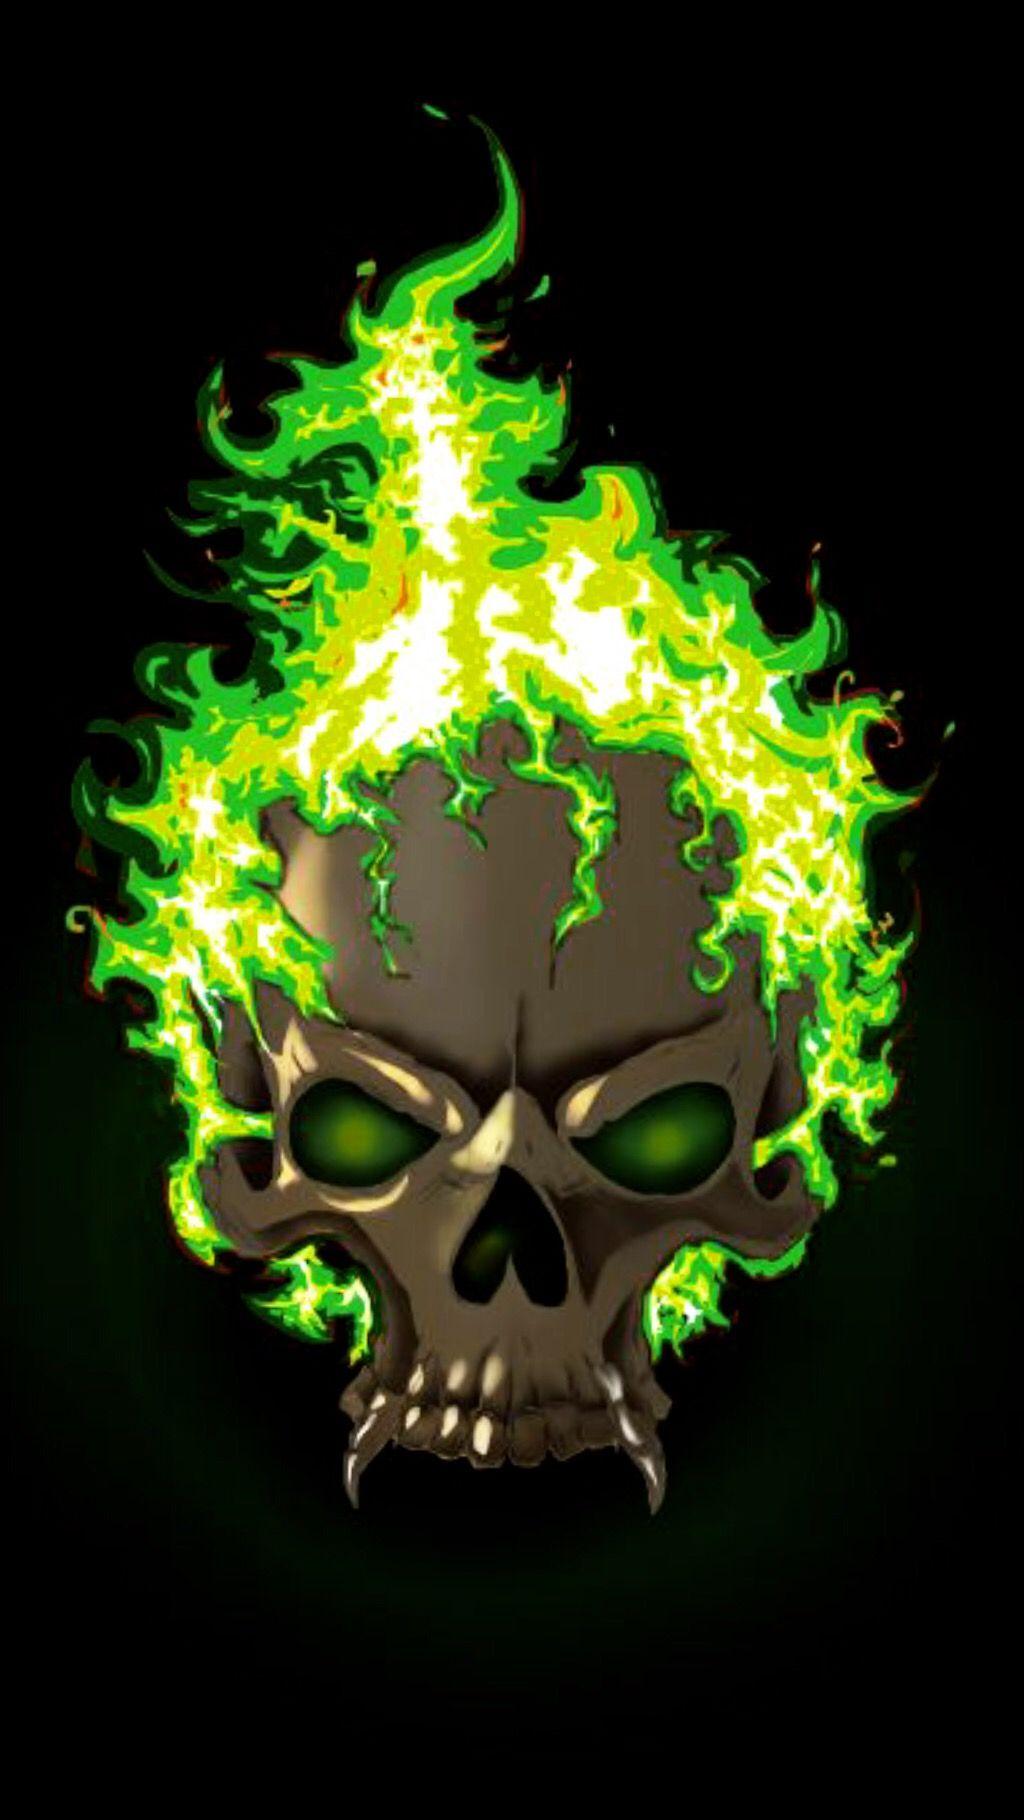 Monster Skull In Digital Art Illustration